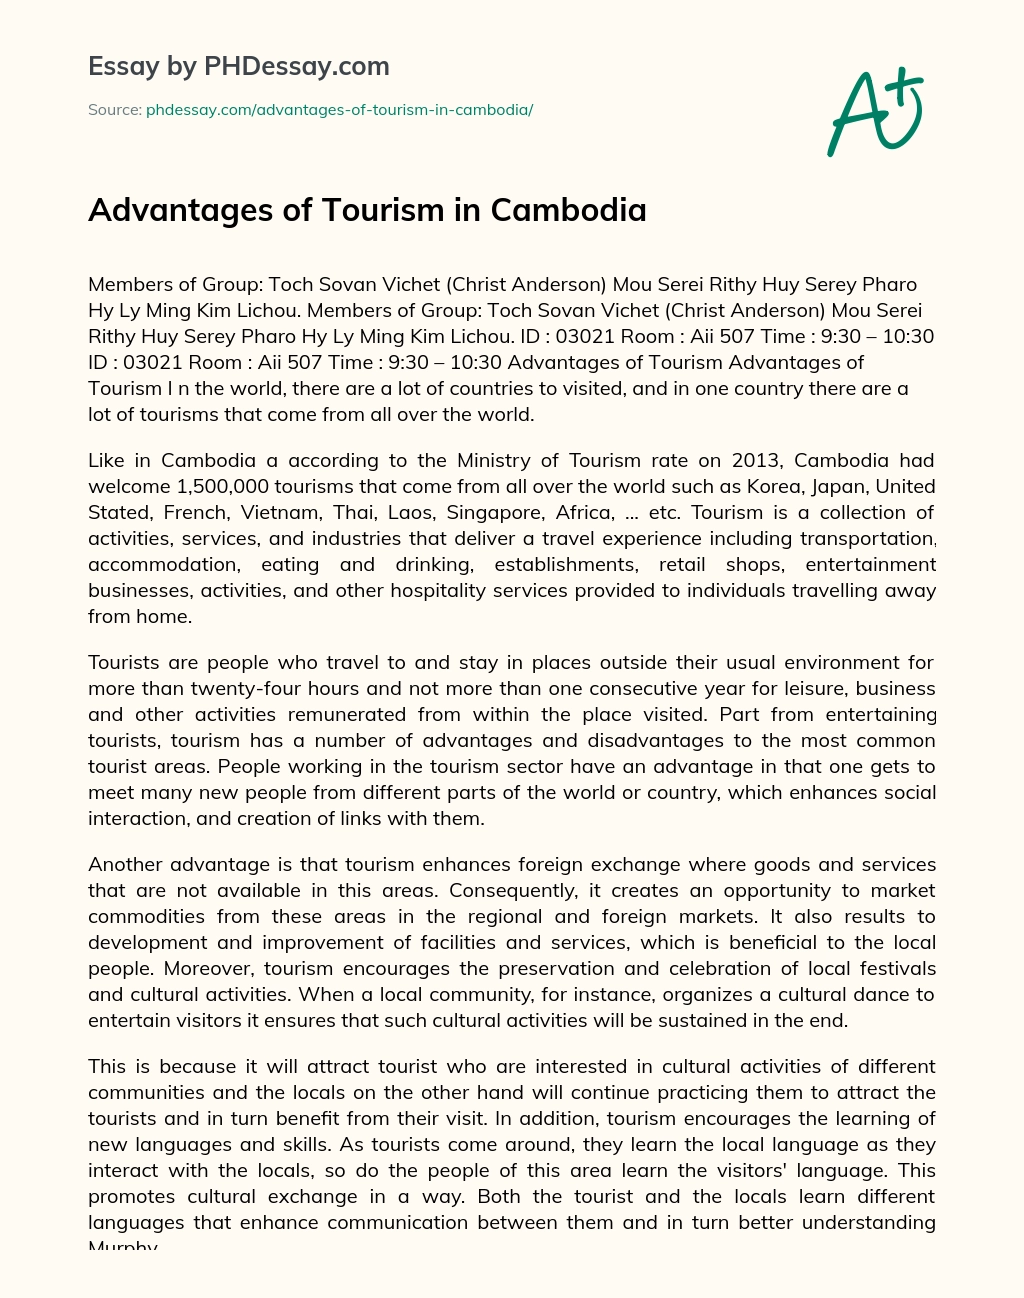 Advantages of Tourism in Cambodia essay